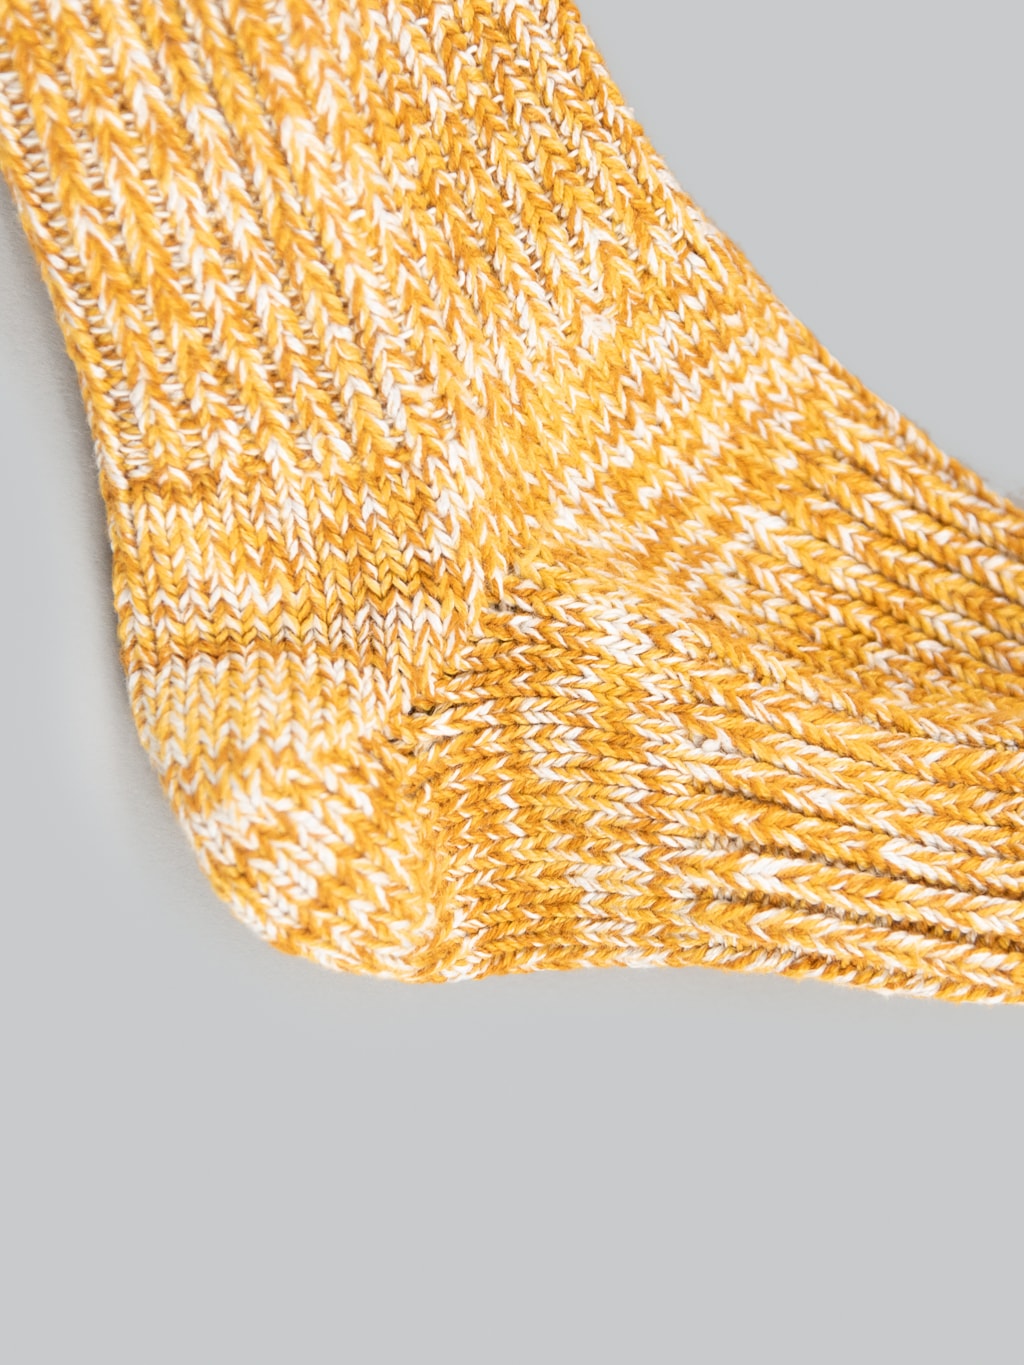 ues denim crew length socks yellow heel